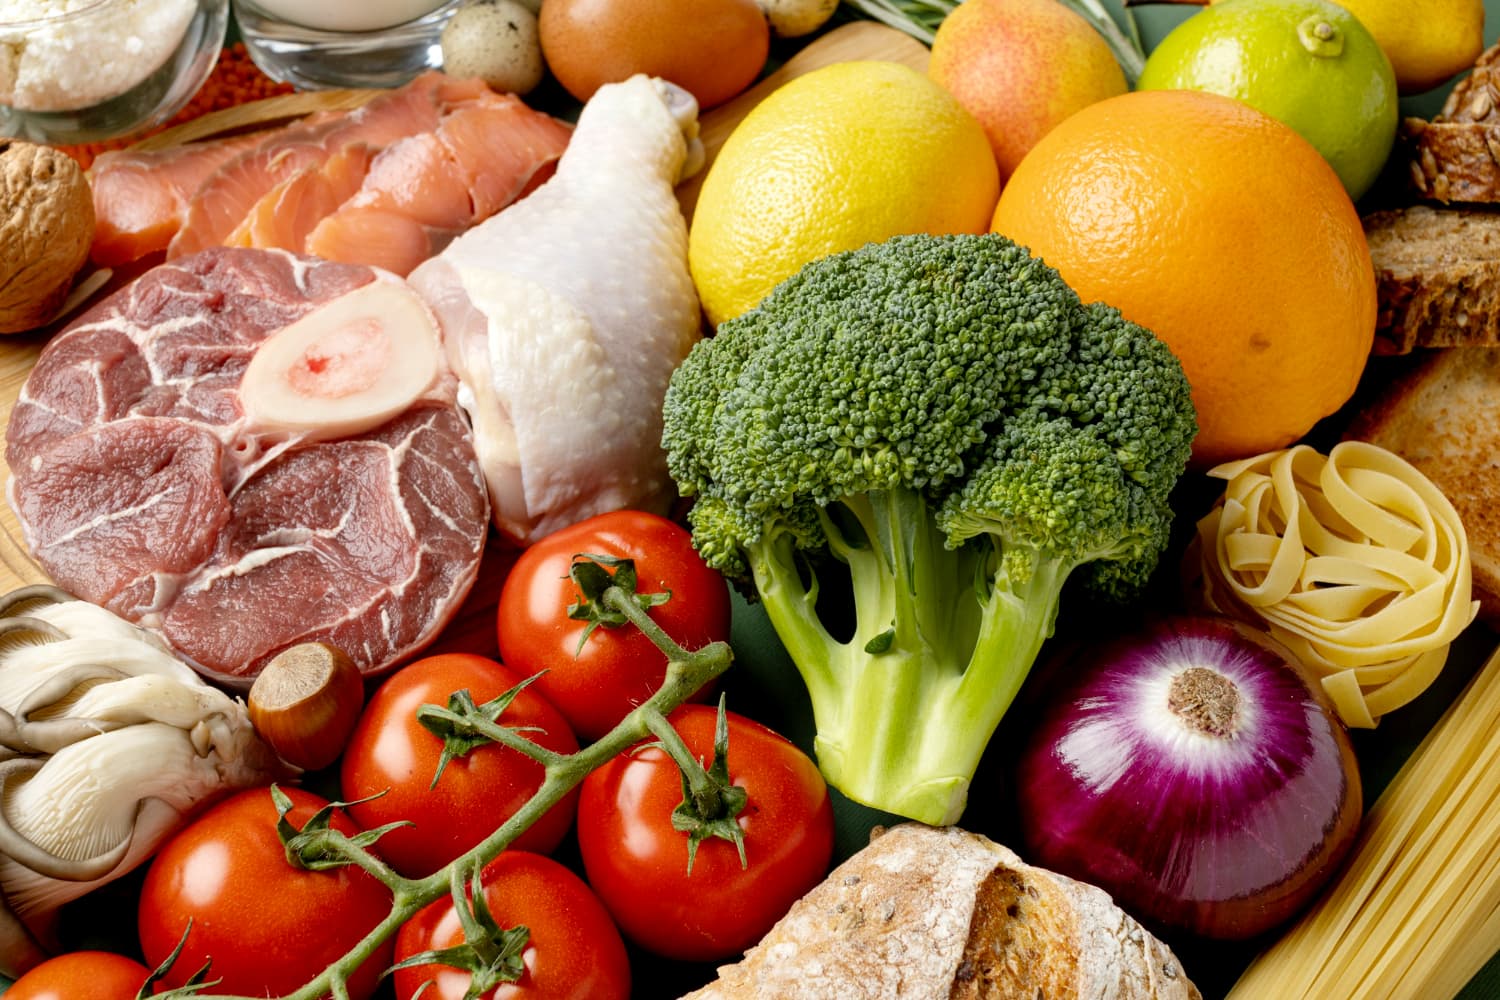 Read more about the article Curs bàsic d’alimentació i nutrició